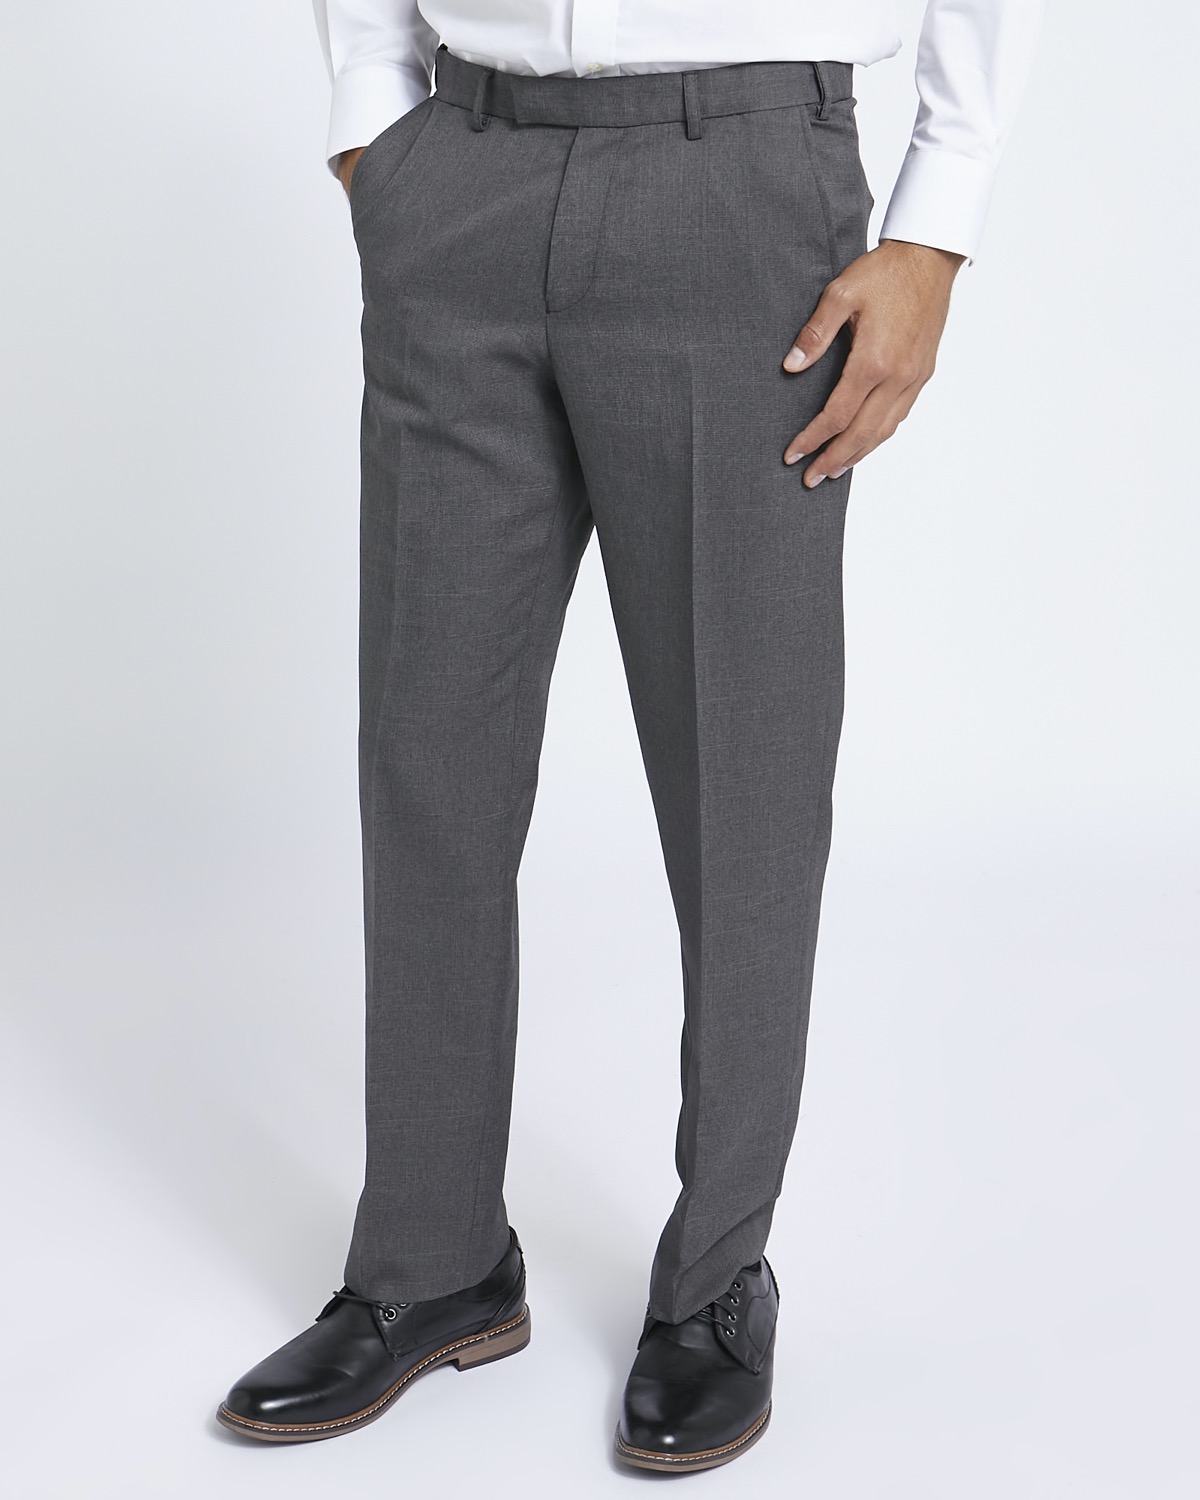 Limehaus | Men's Silver Grey Cropped Suit Trousers | Suit Direct